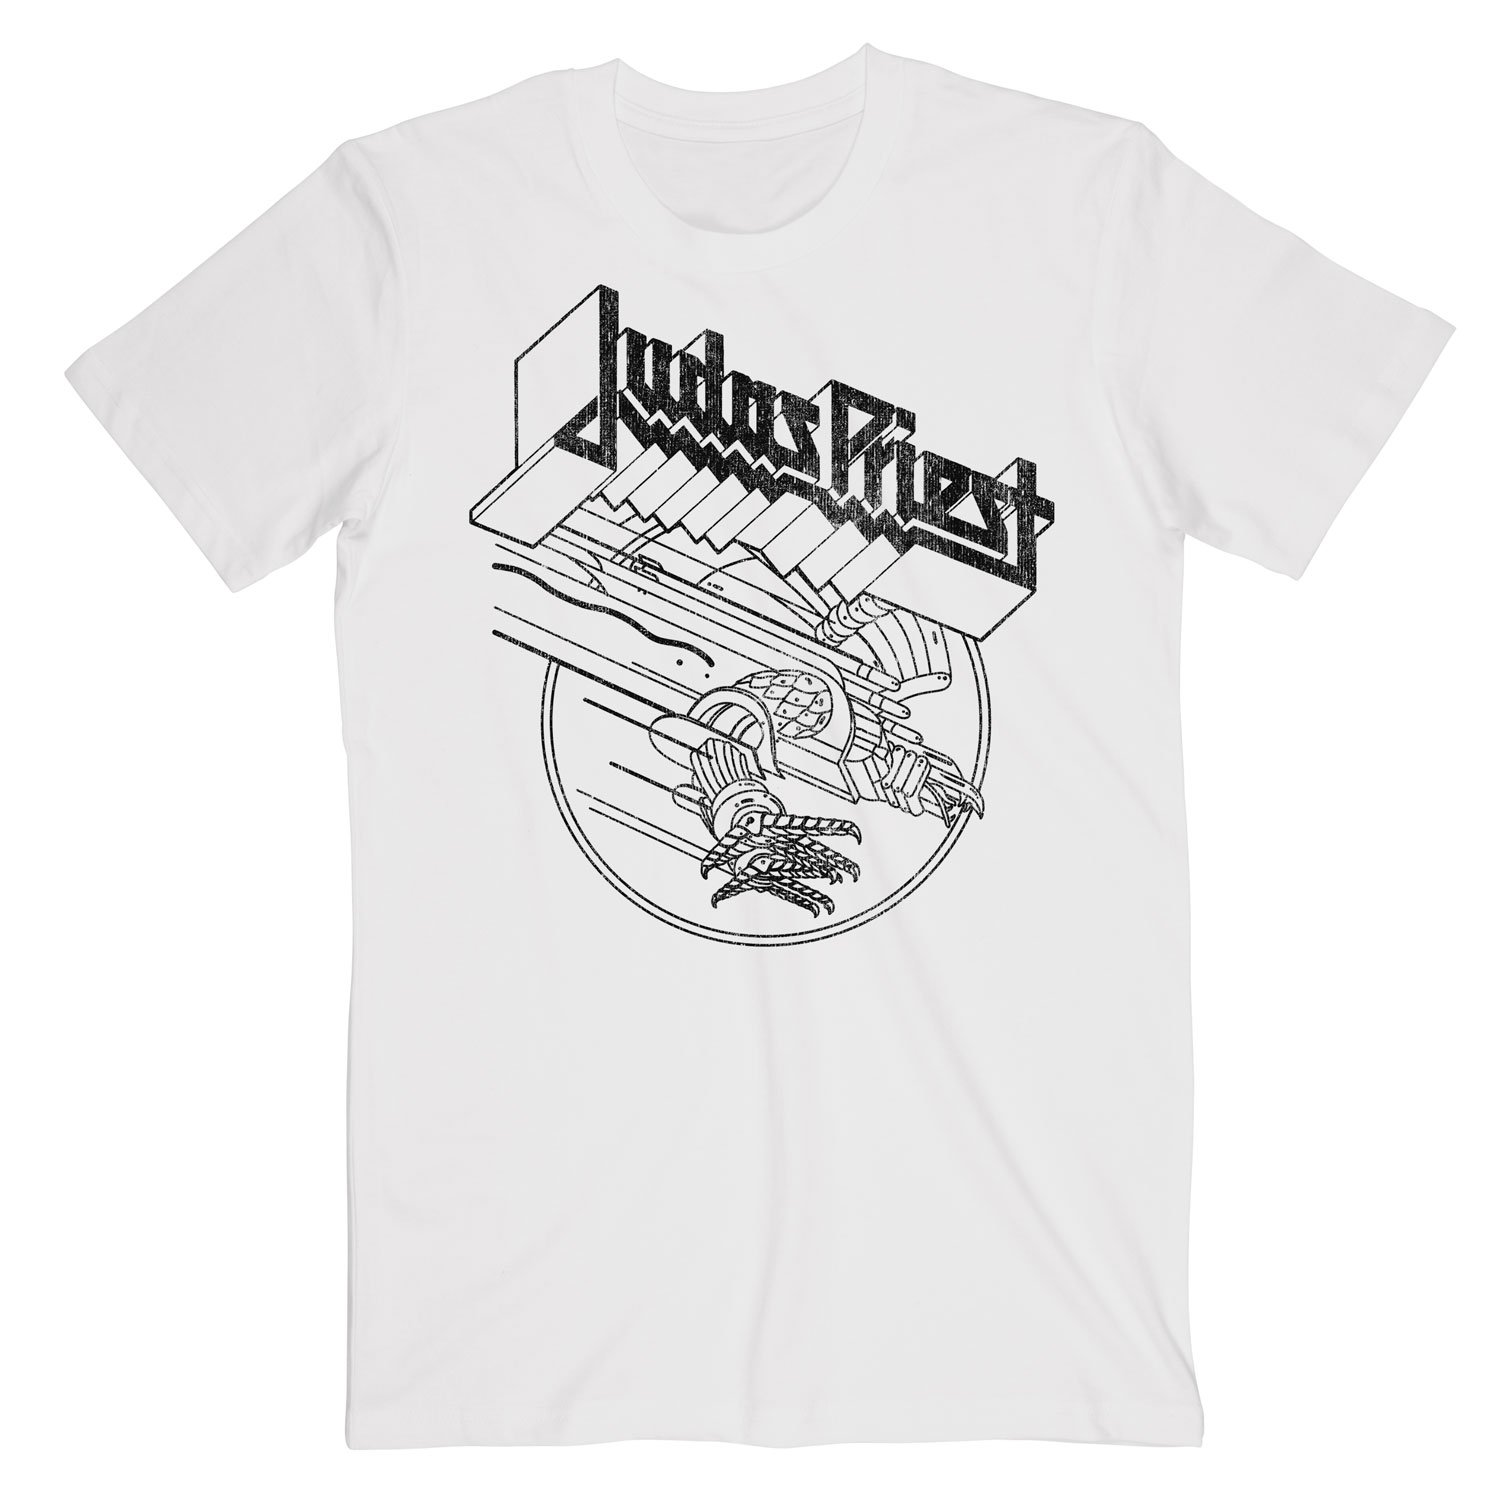 Judas Priest - Screaming Eagle White T-Shirt